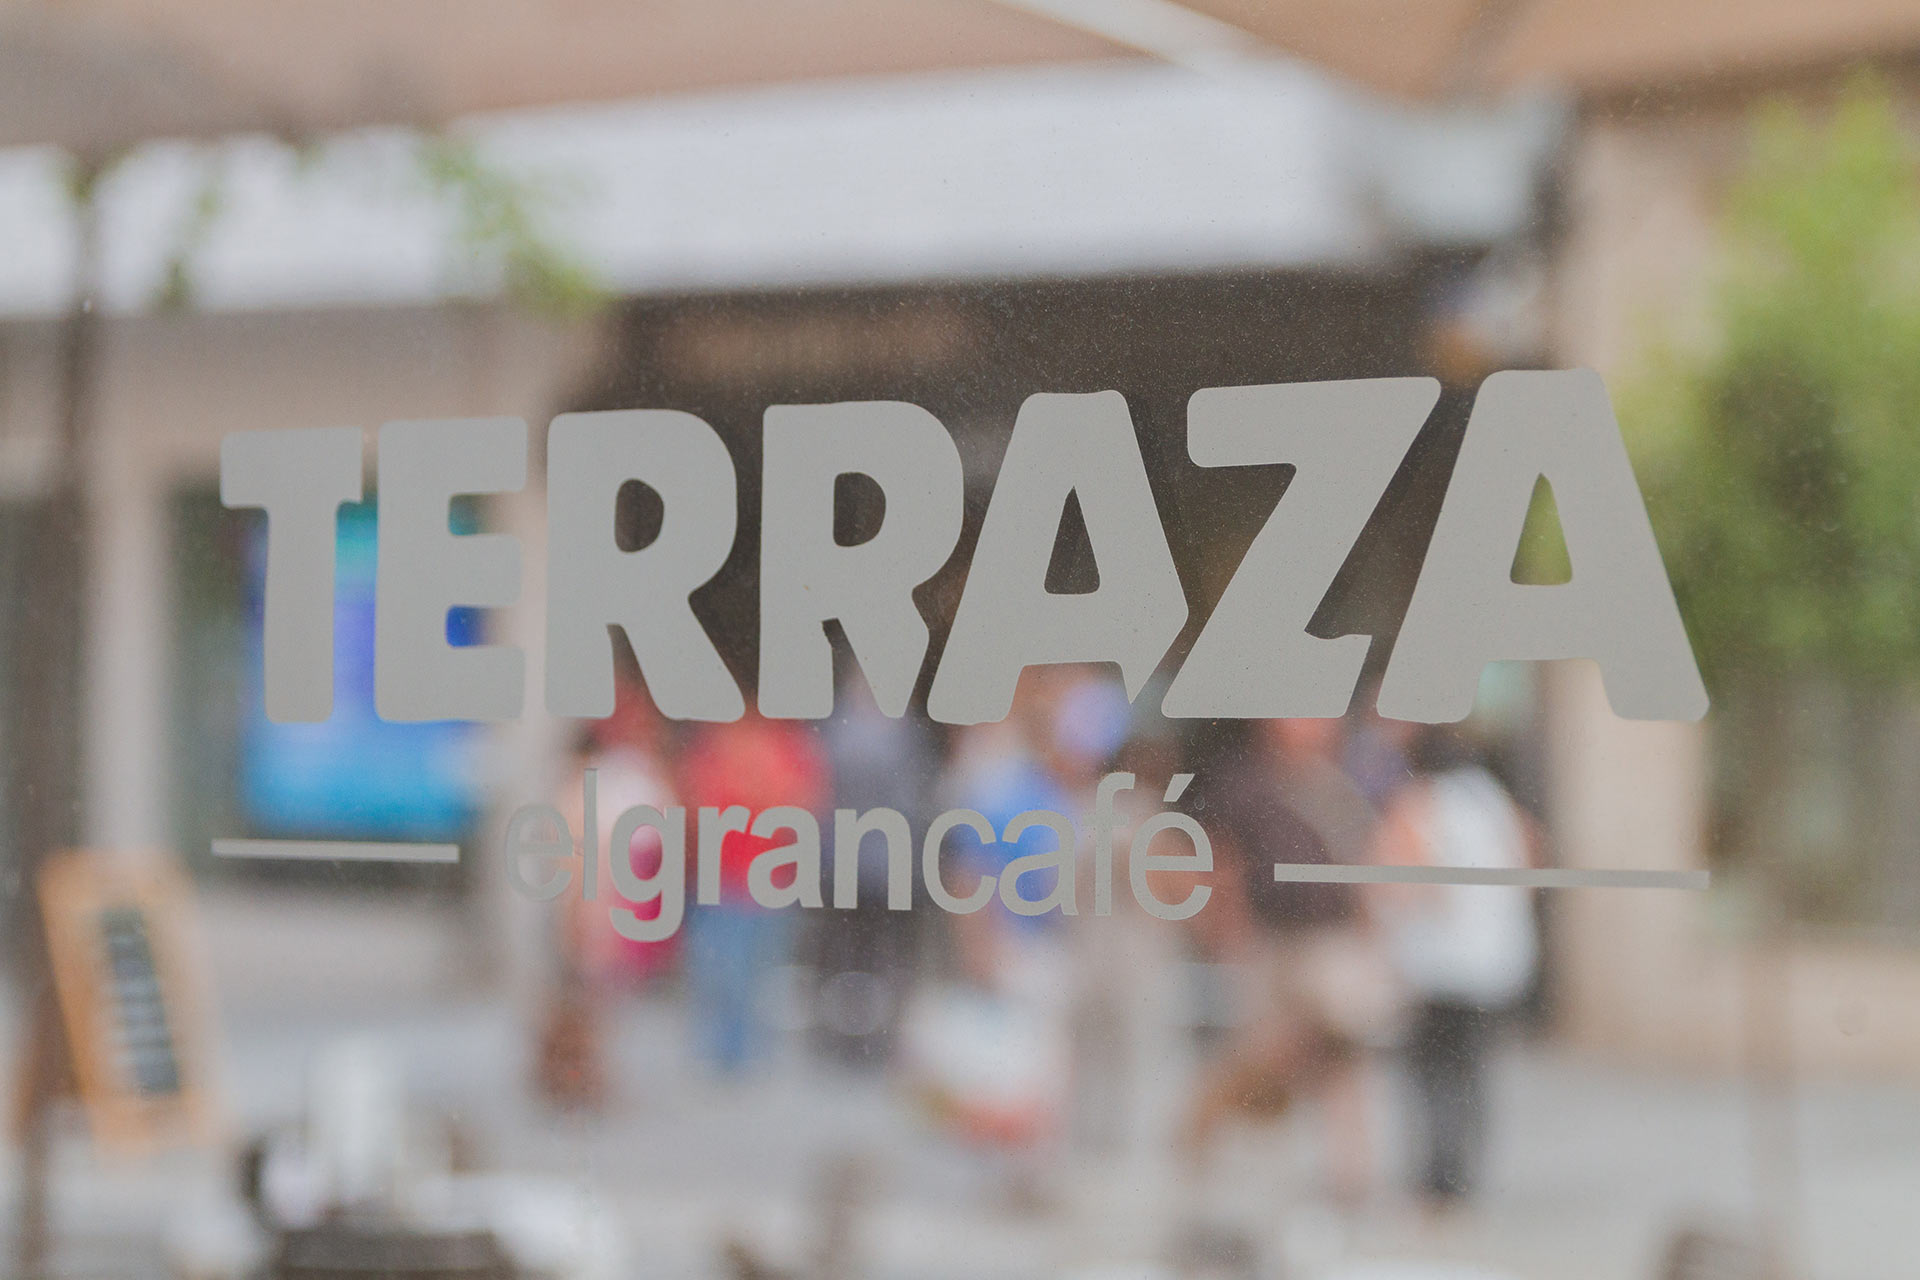 Terraza El Gran Café